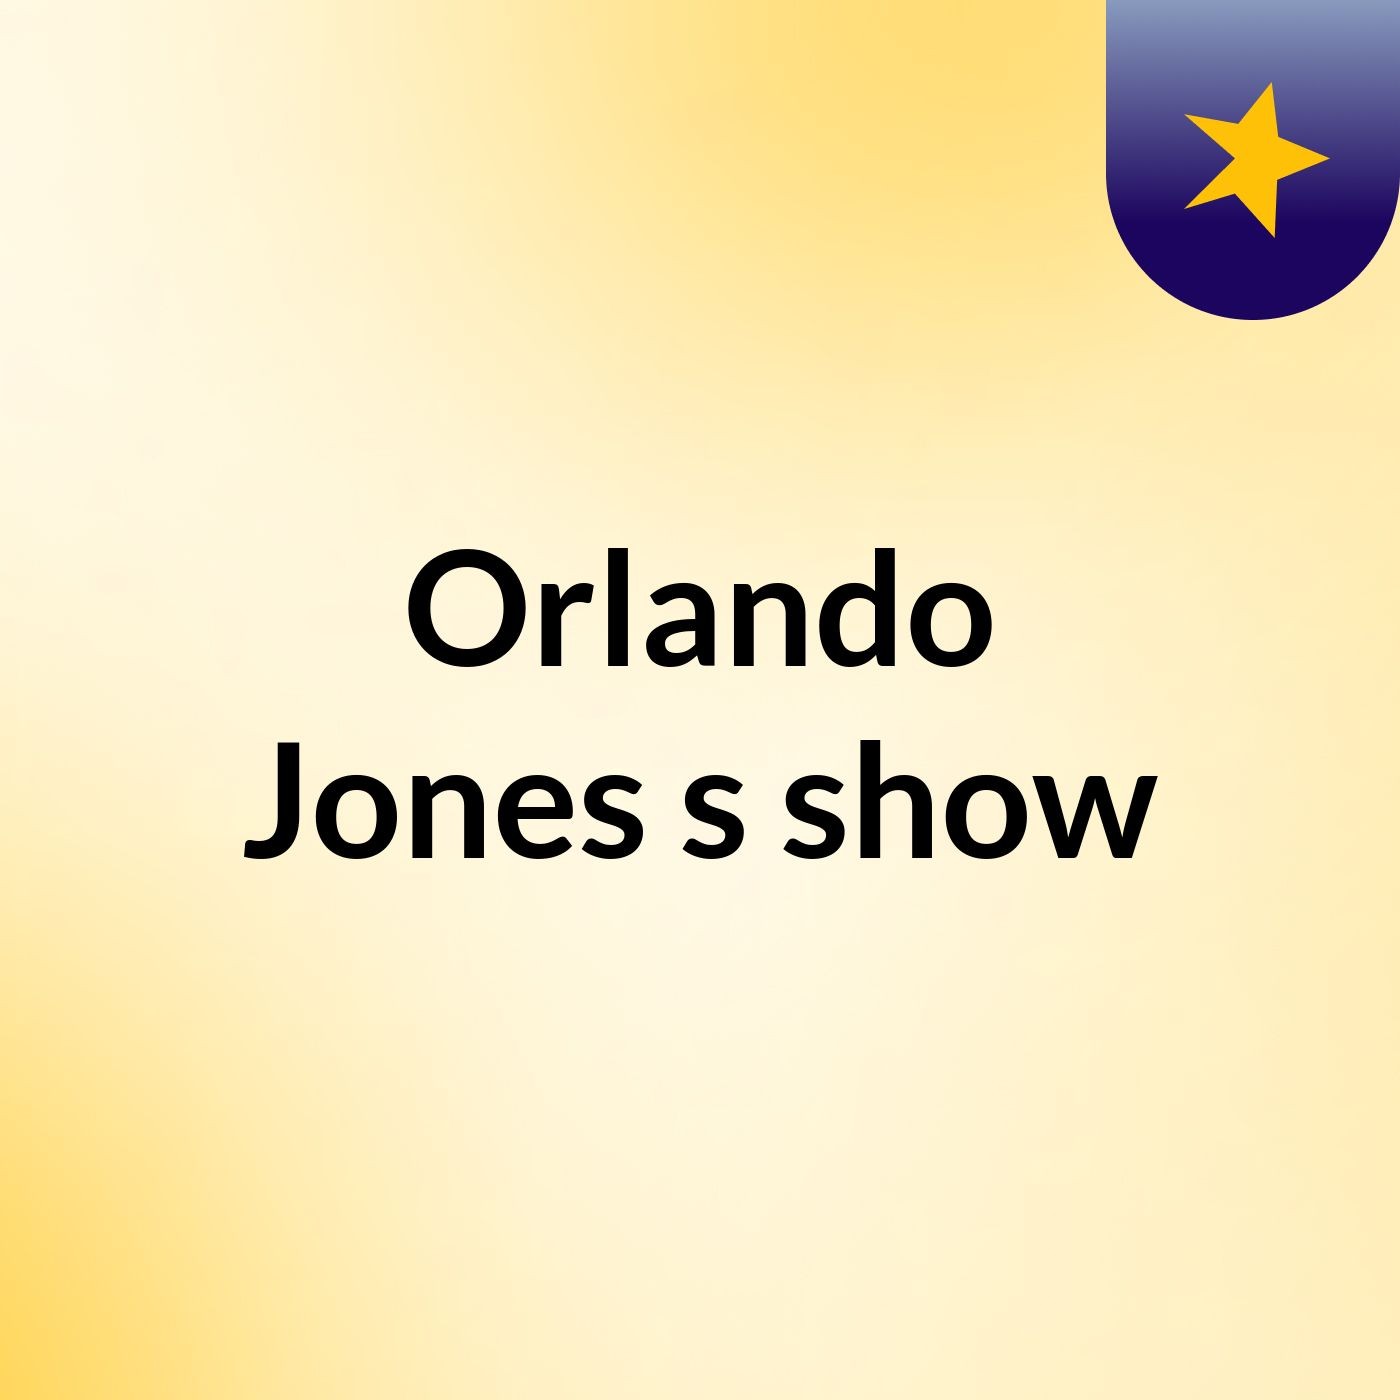 Orlando Jones's show